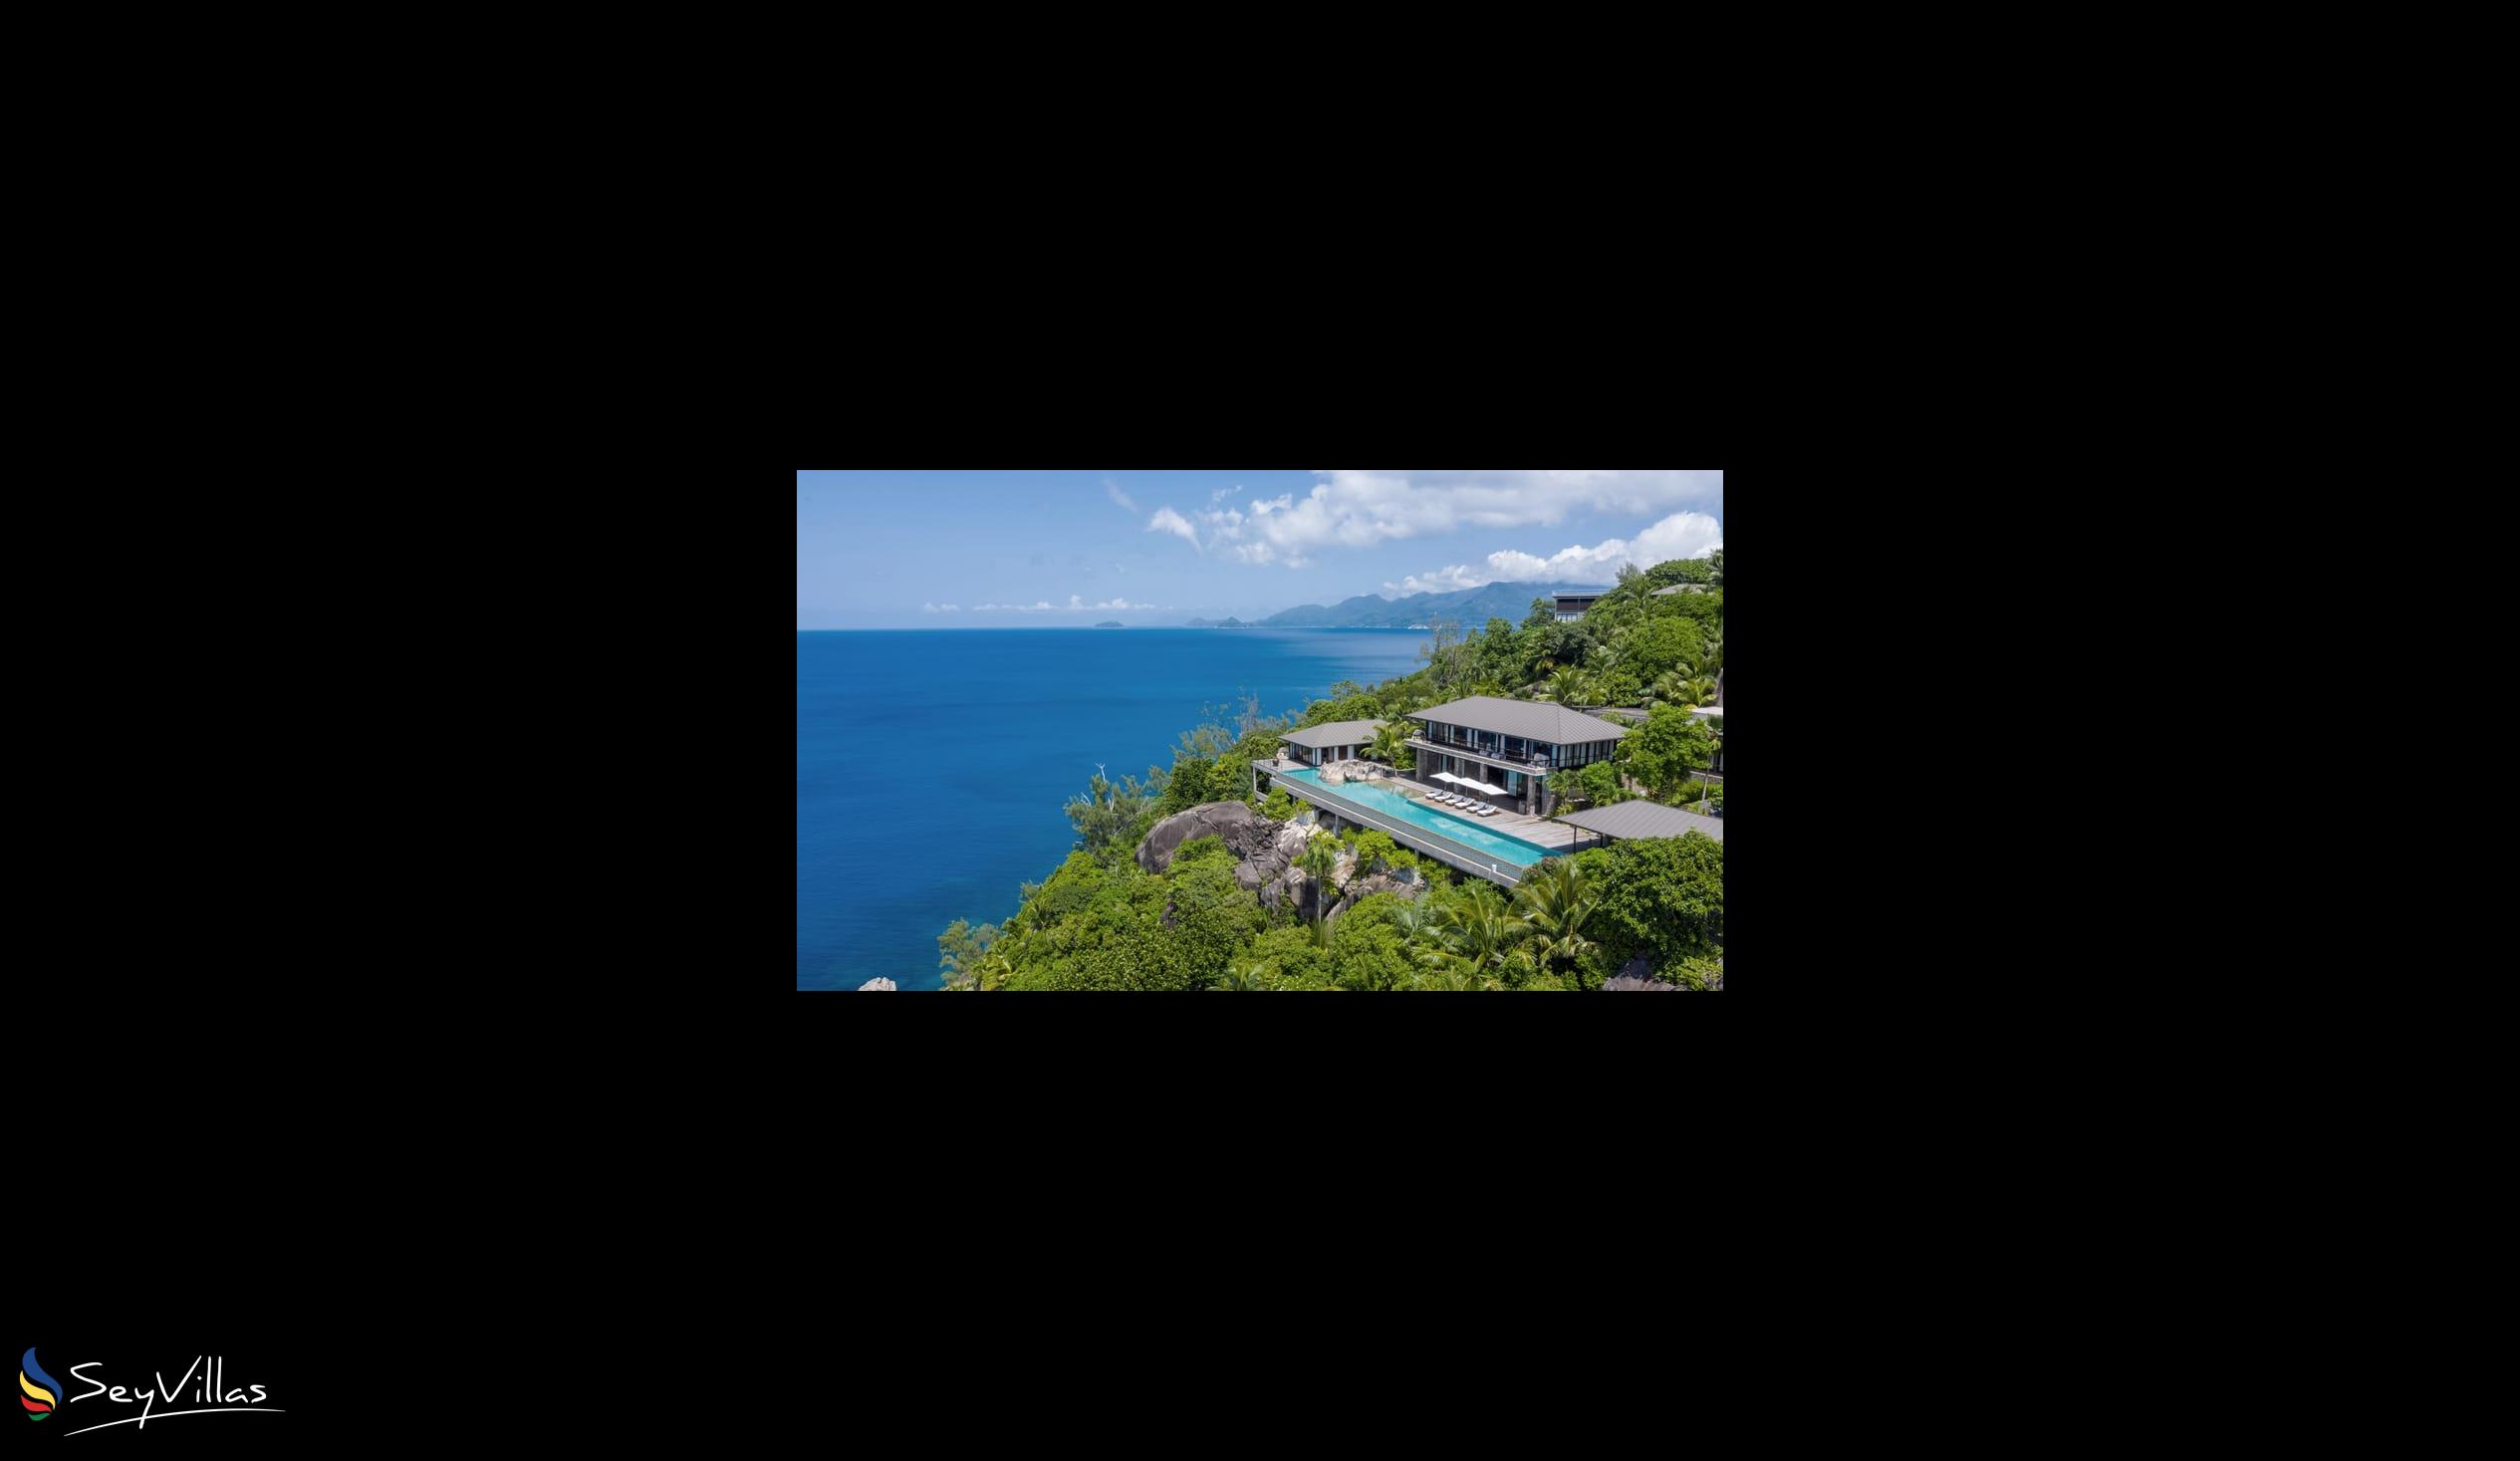 Photo 131: Four Seasons Resort - Mahé (Seychelles)